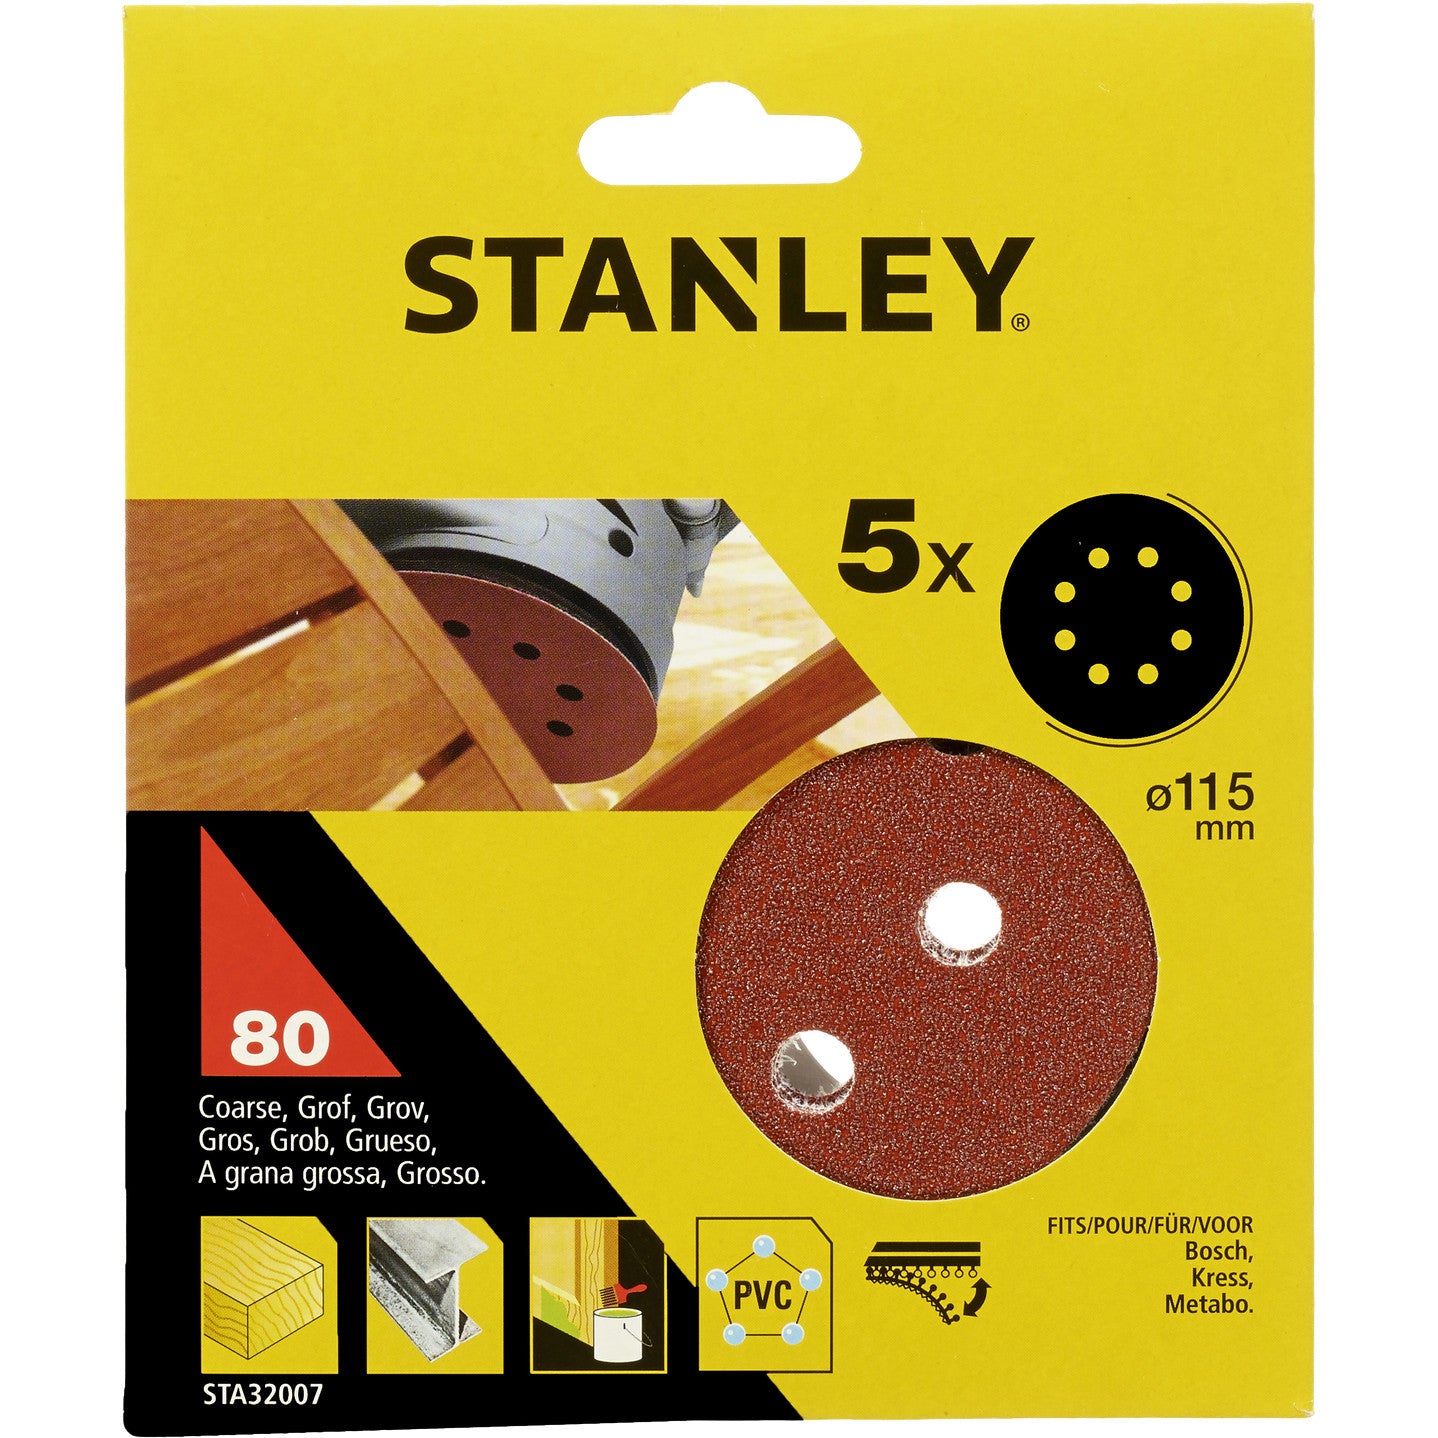 Piranha/stanley sta32007 (x32007)  5 dischi vel.rot-orb 115 gr.80